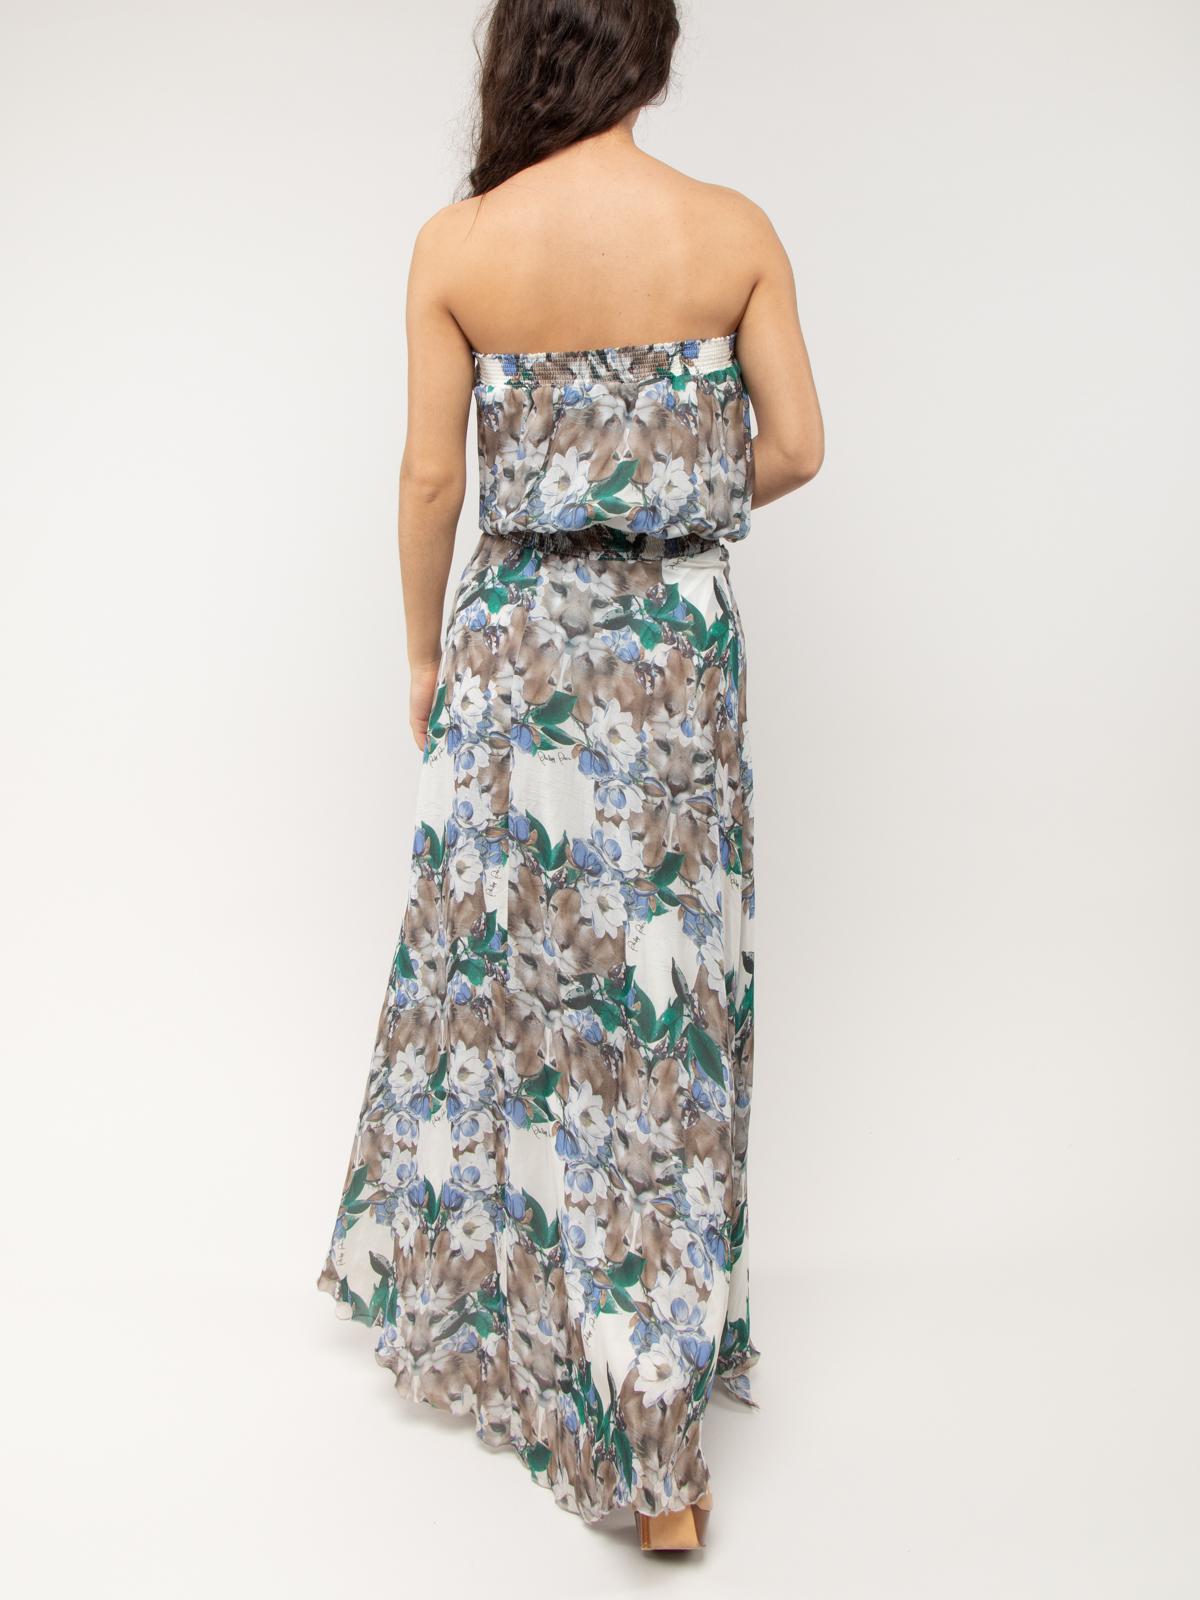 Pre-Loved Philipp Plein Women's Strapless Silk Patterned Dress 1